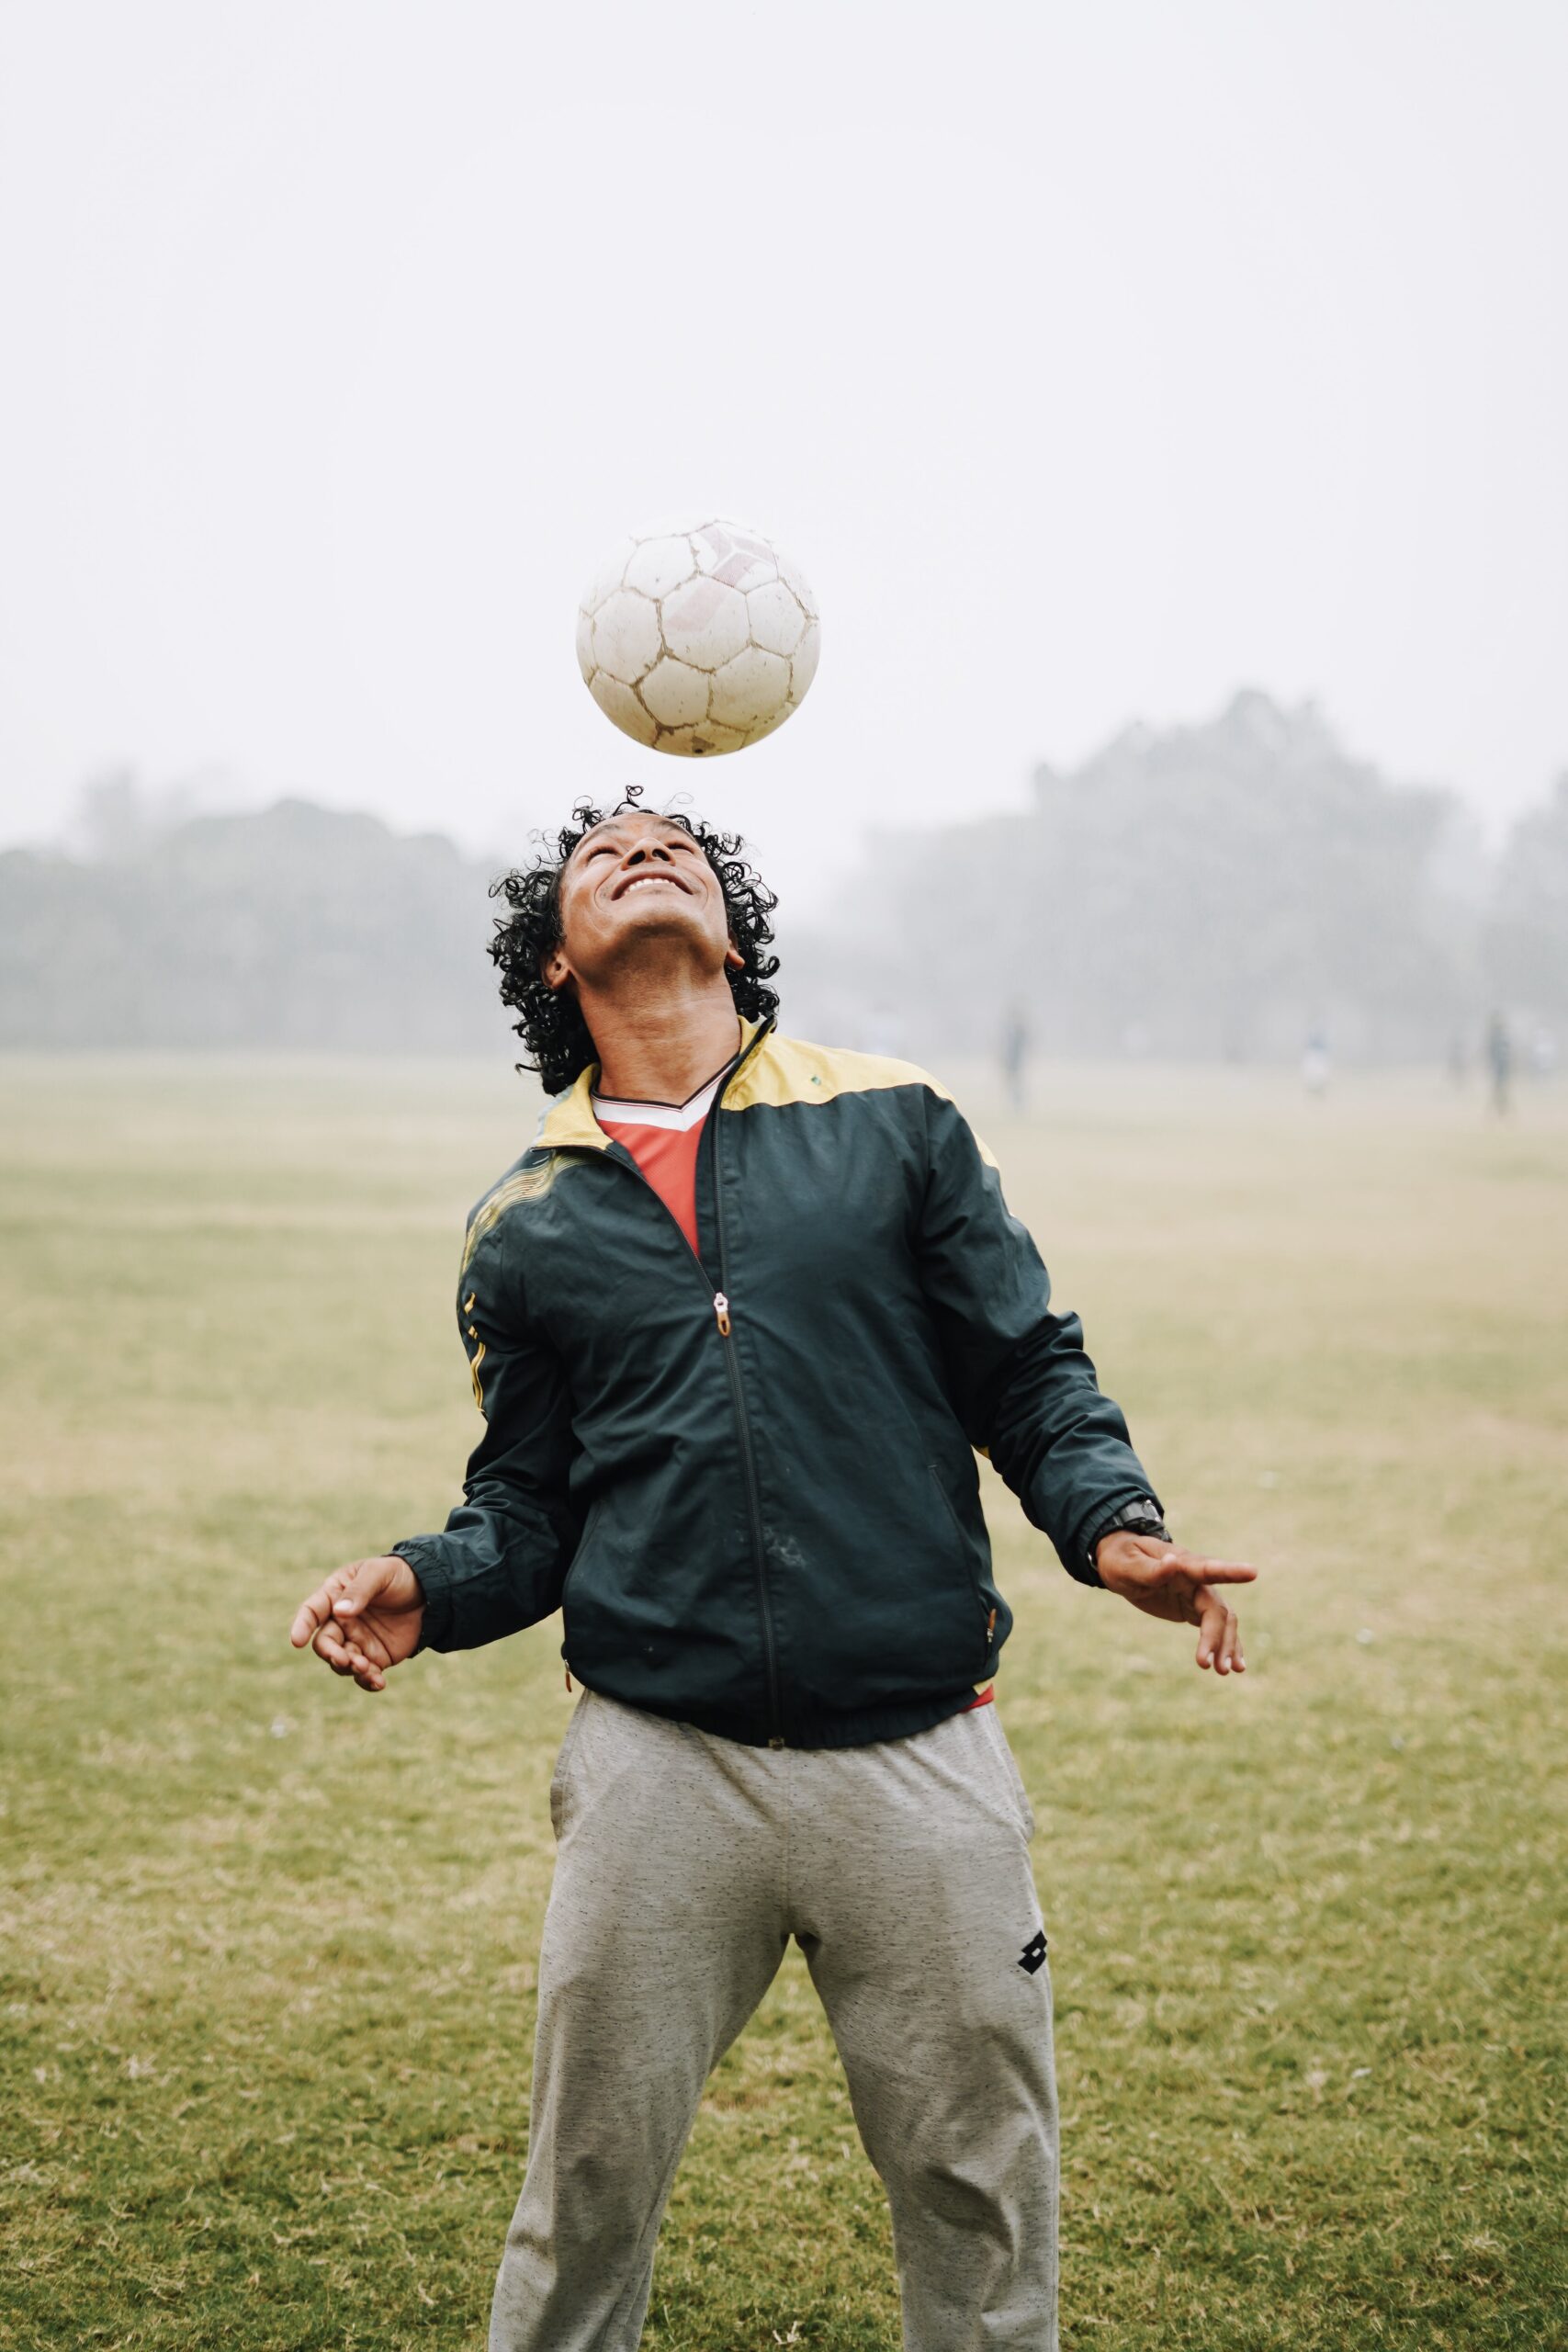 soccer basics - ball control